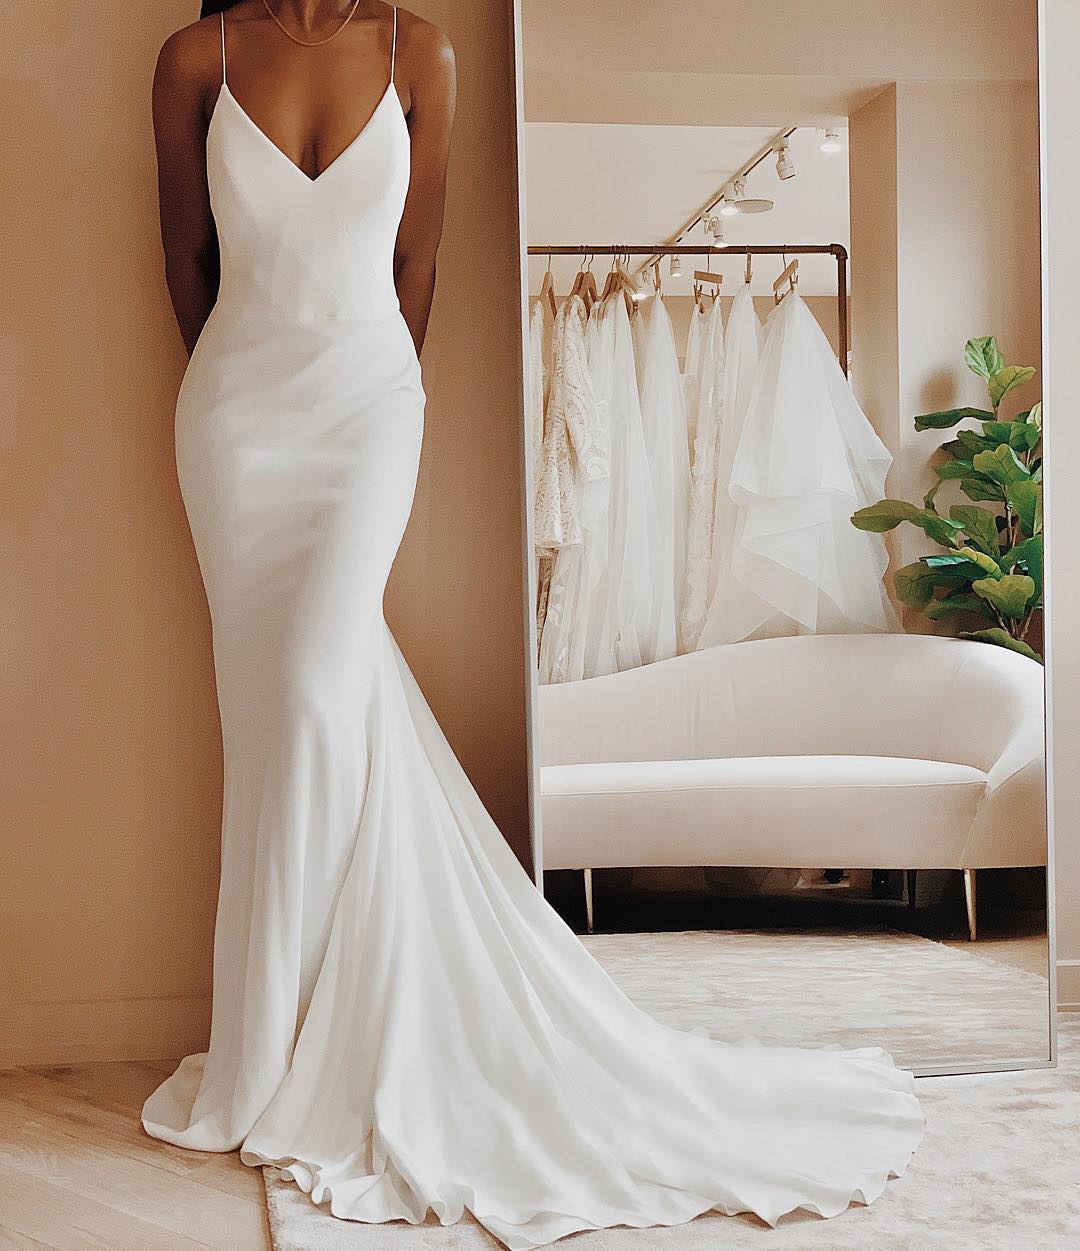 LTP0987,Sexy white bridal dress spaghetti straps wedding gown mermaid prom dress